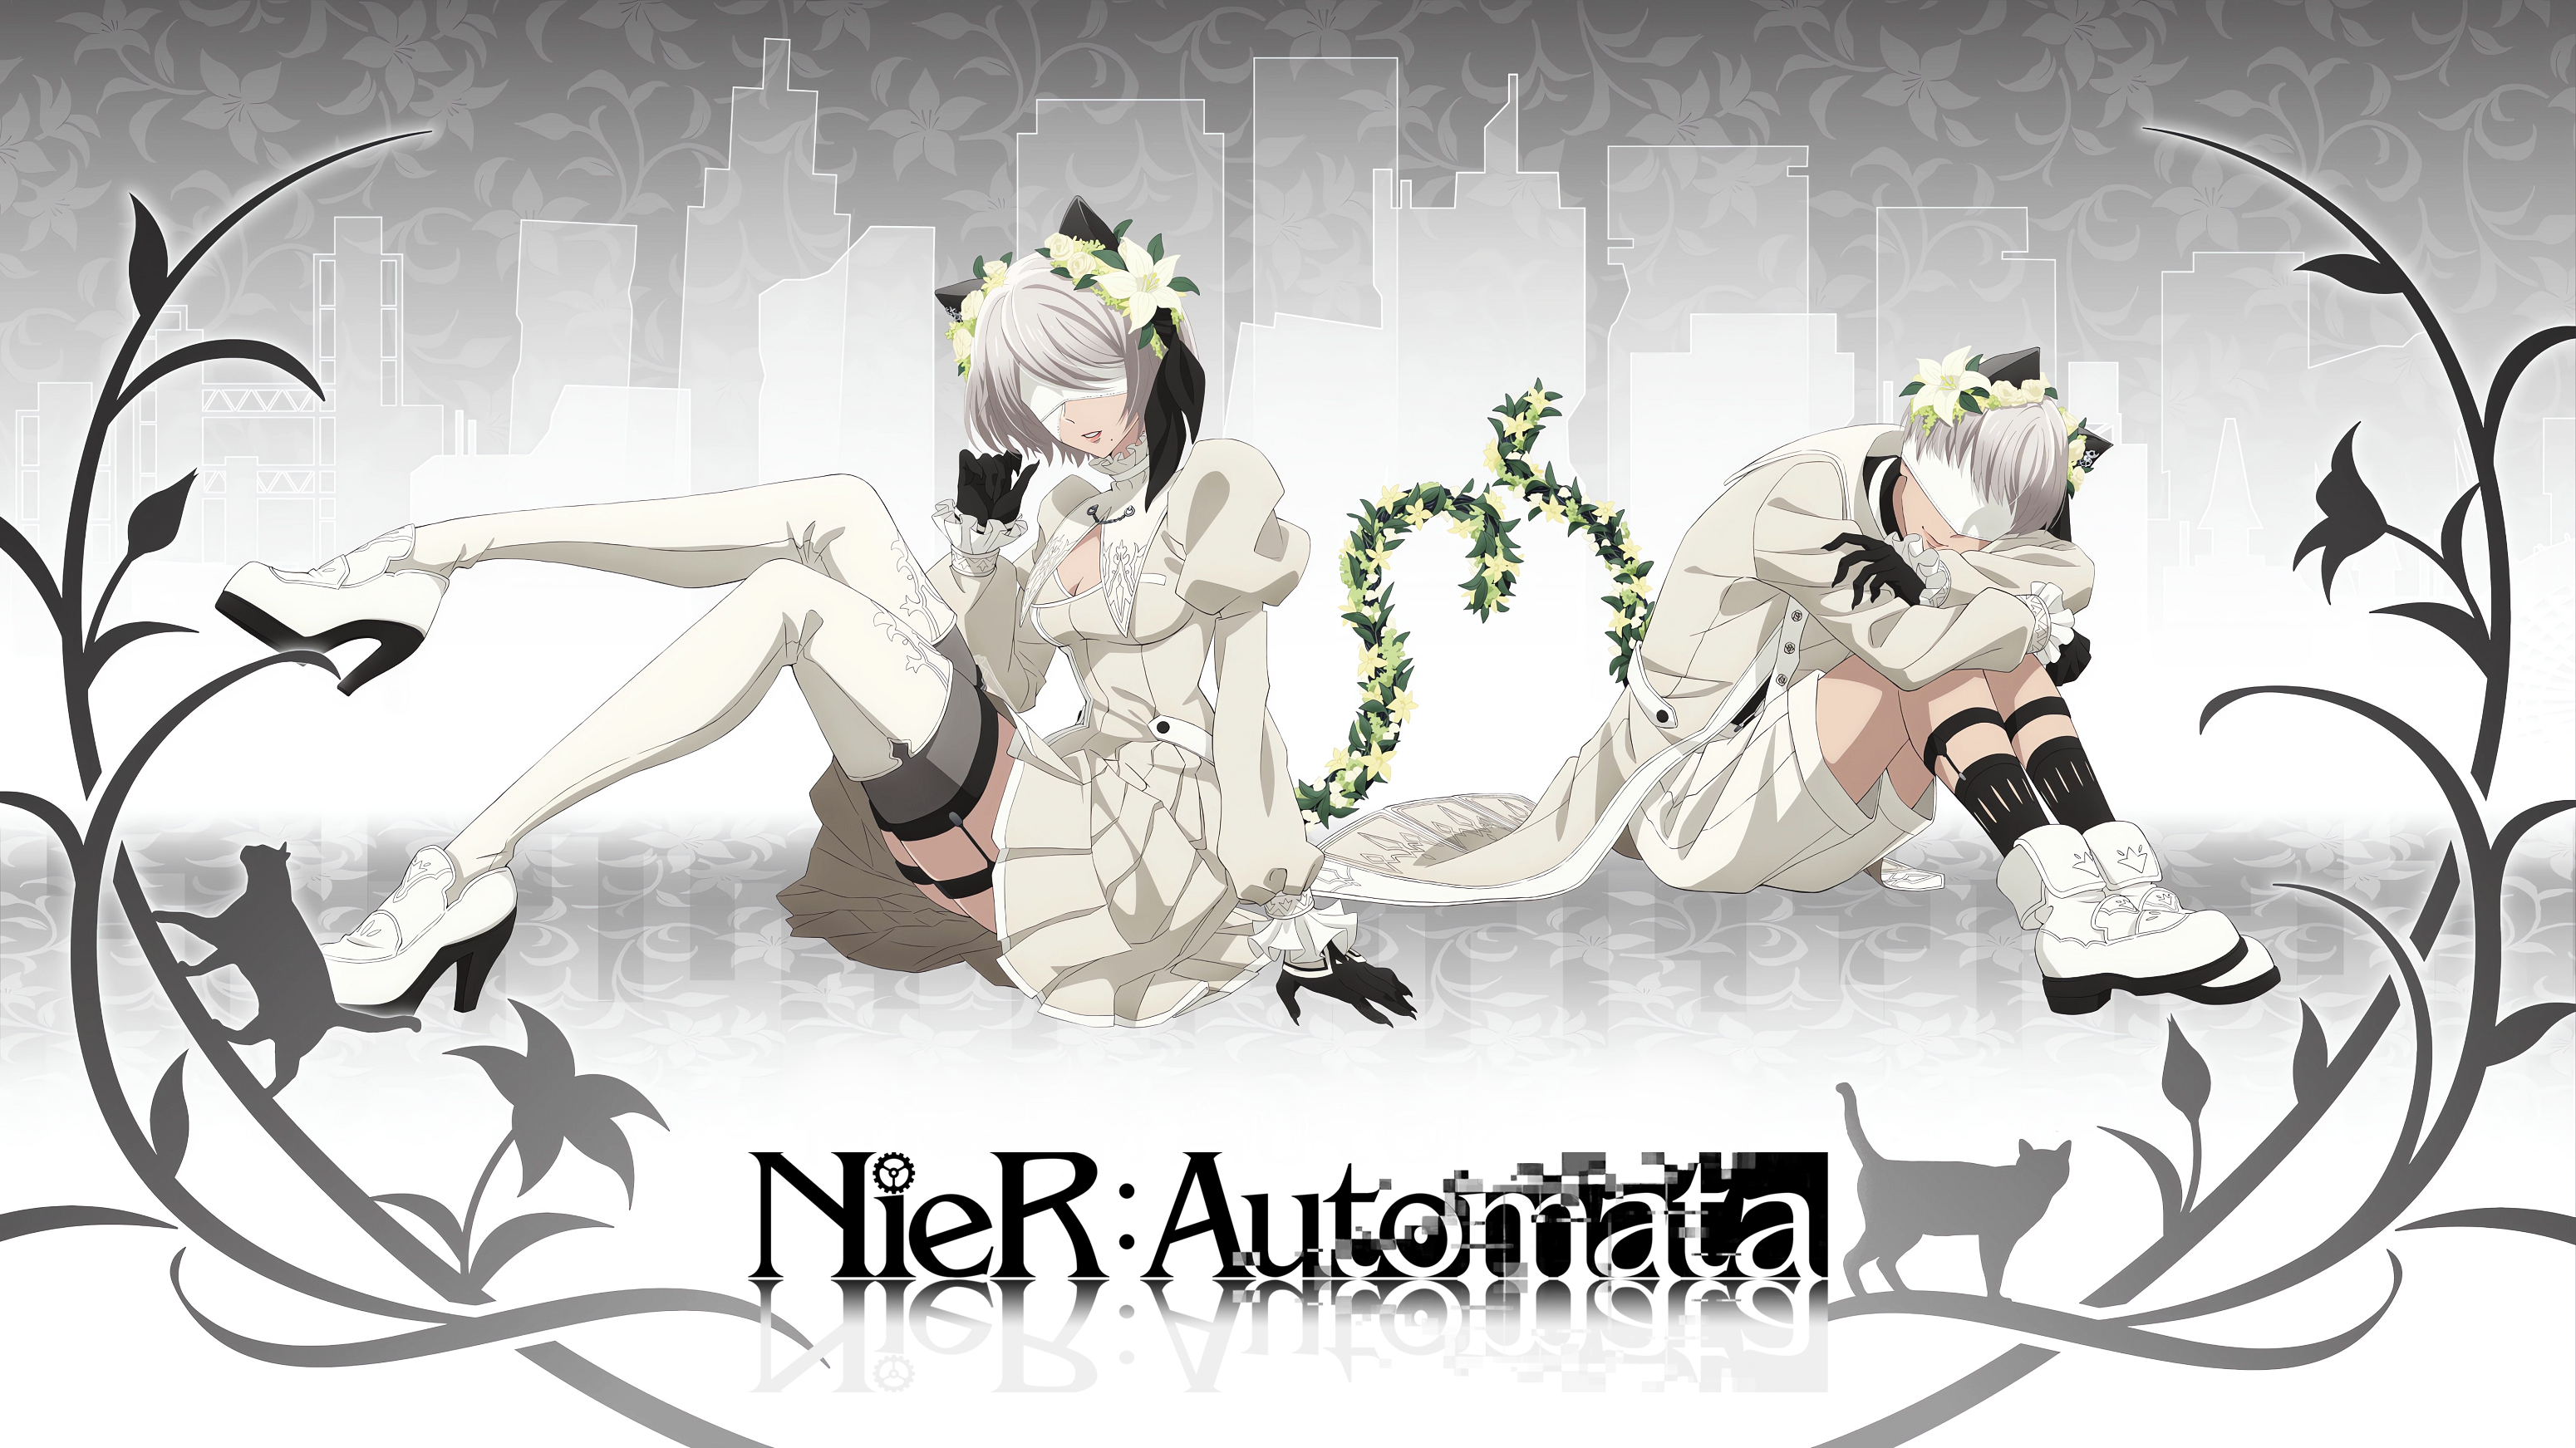 Nier Automata 2B Nier Automata 9S Nier Automata Anime Boys Anime Girls Silver Hair Flowers Smiling W 3100x1743